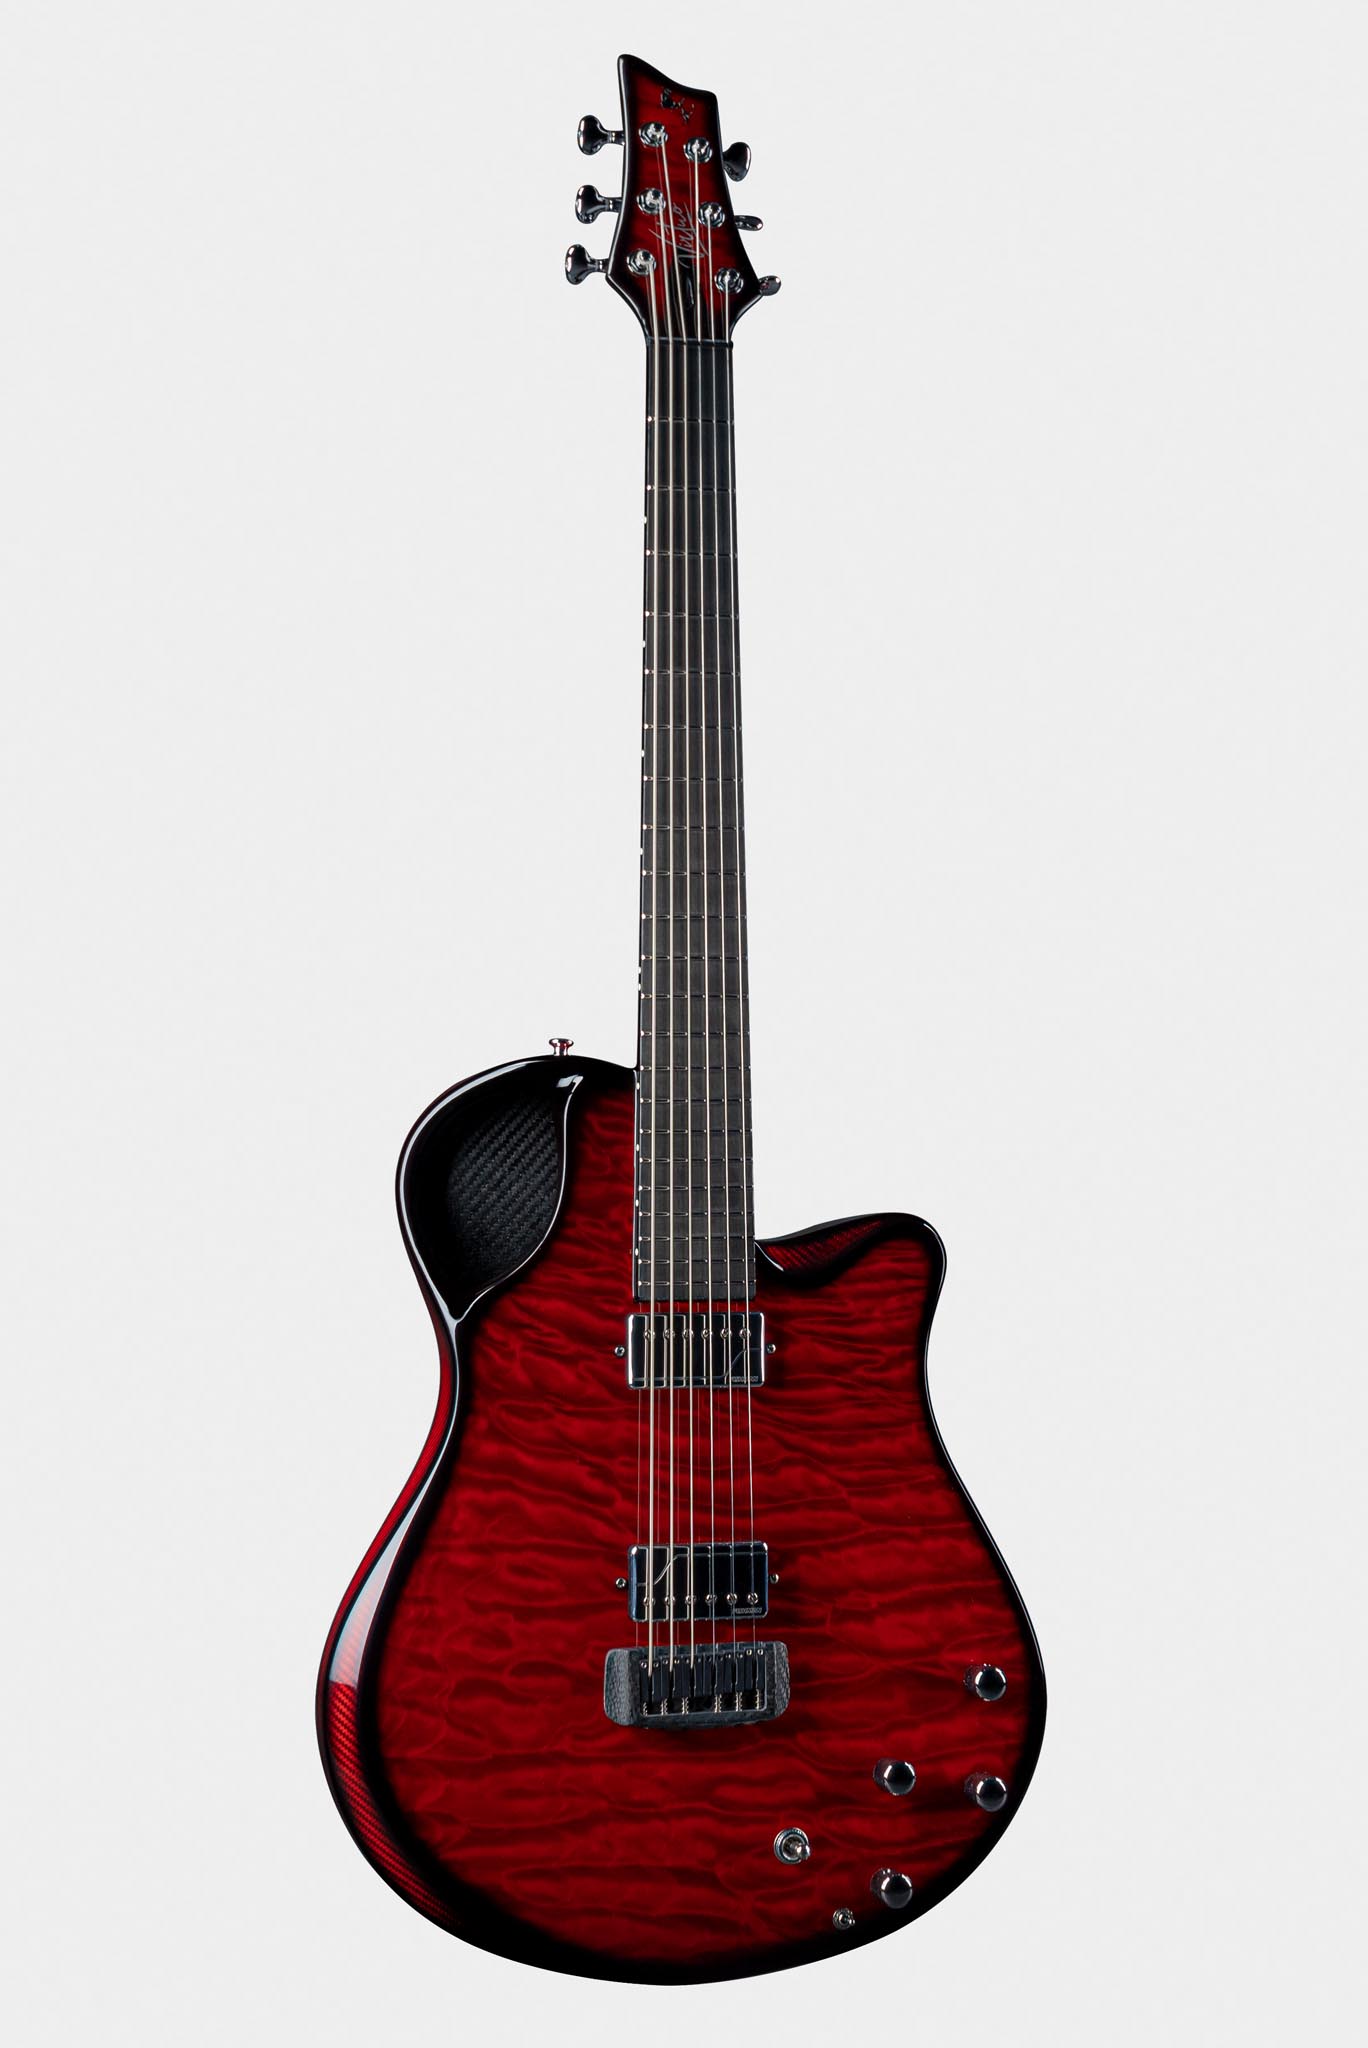 Vibrant Red Emerald Virtuo Guitar